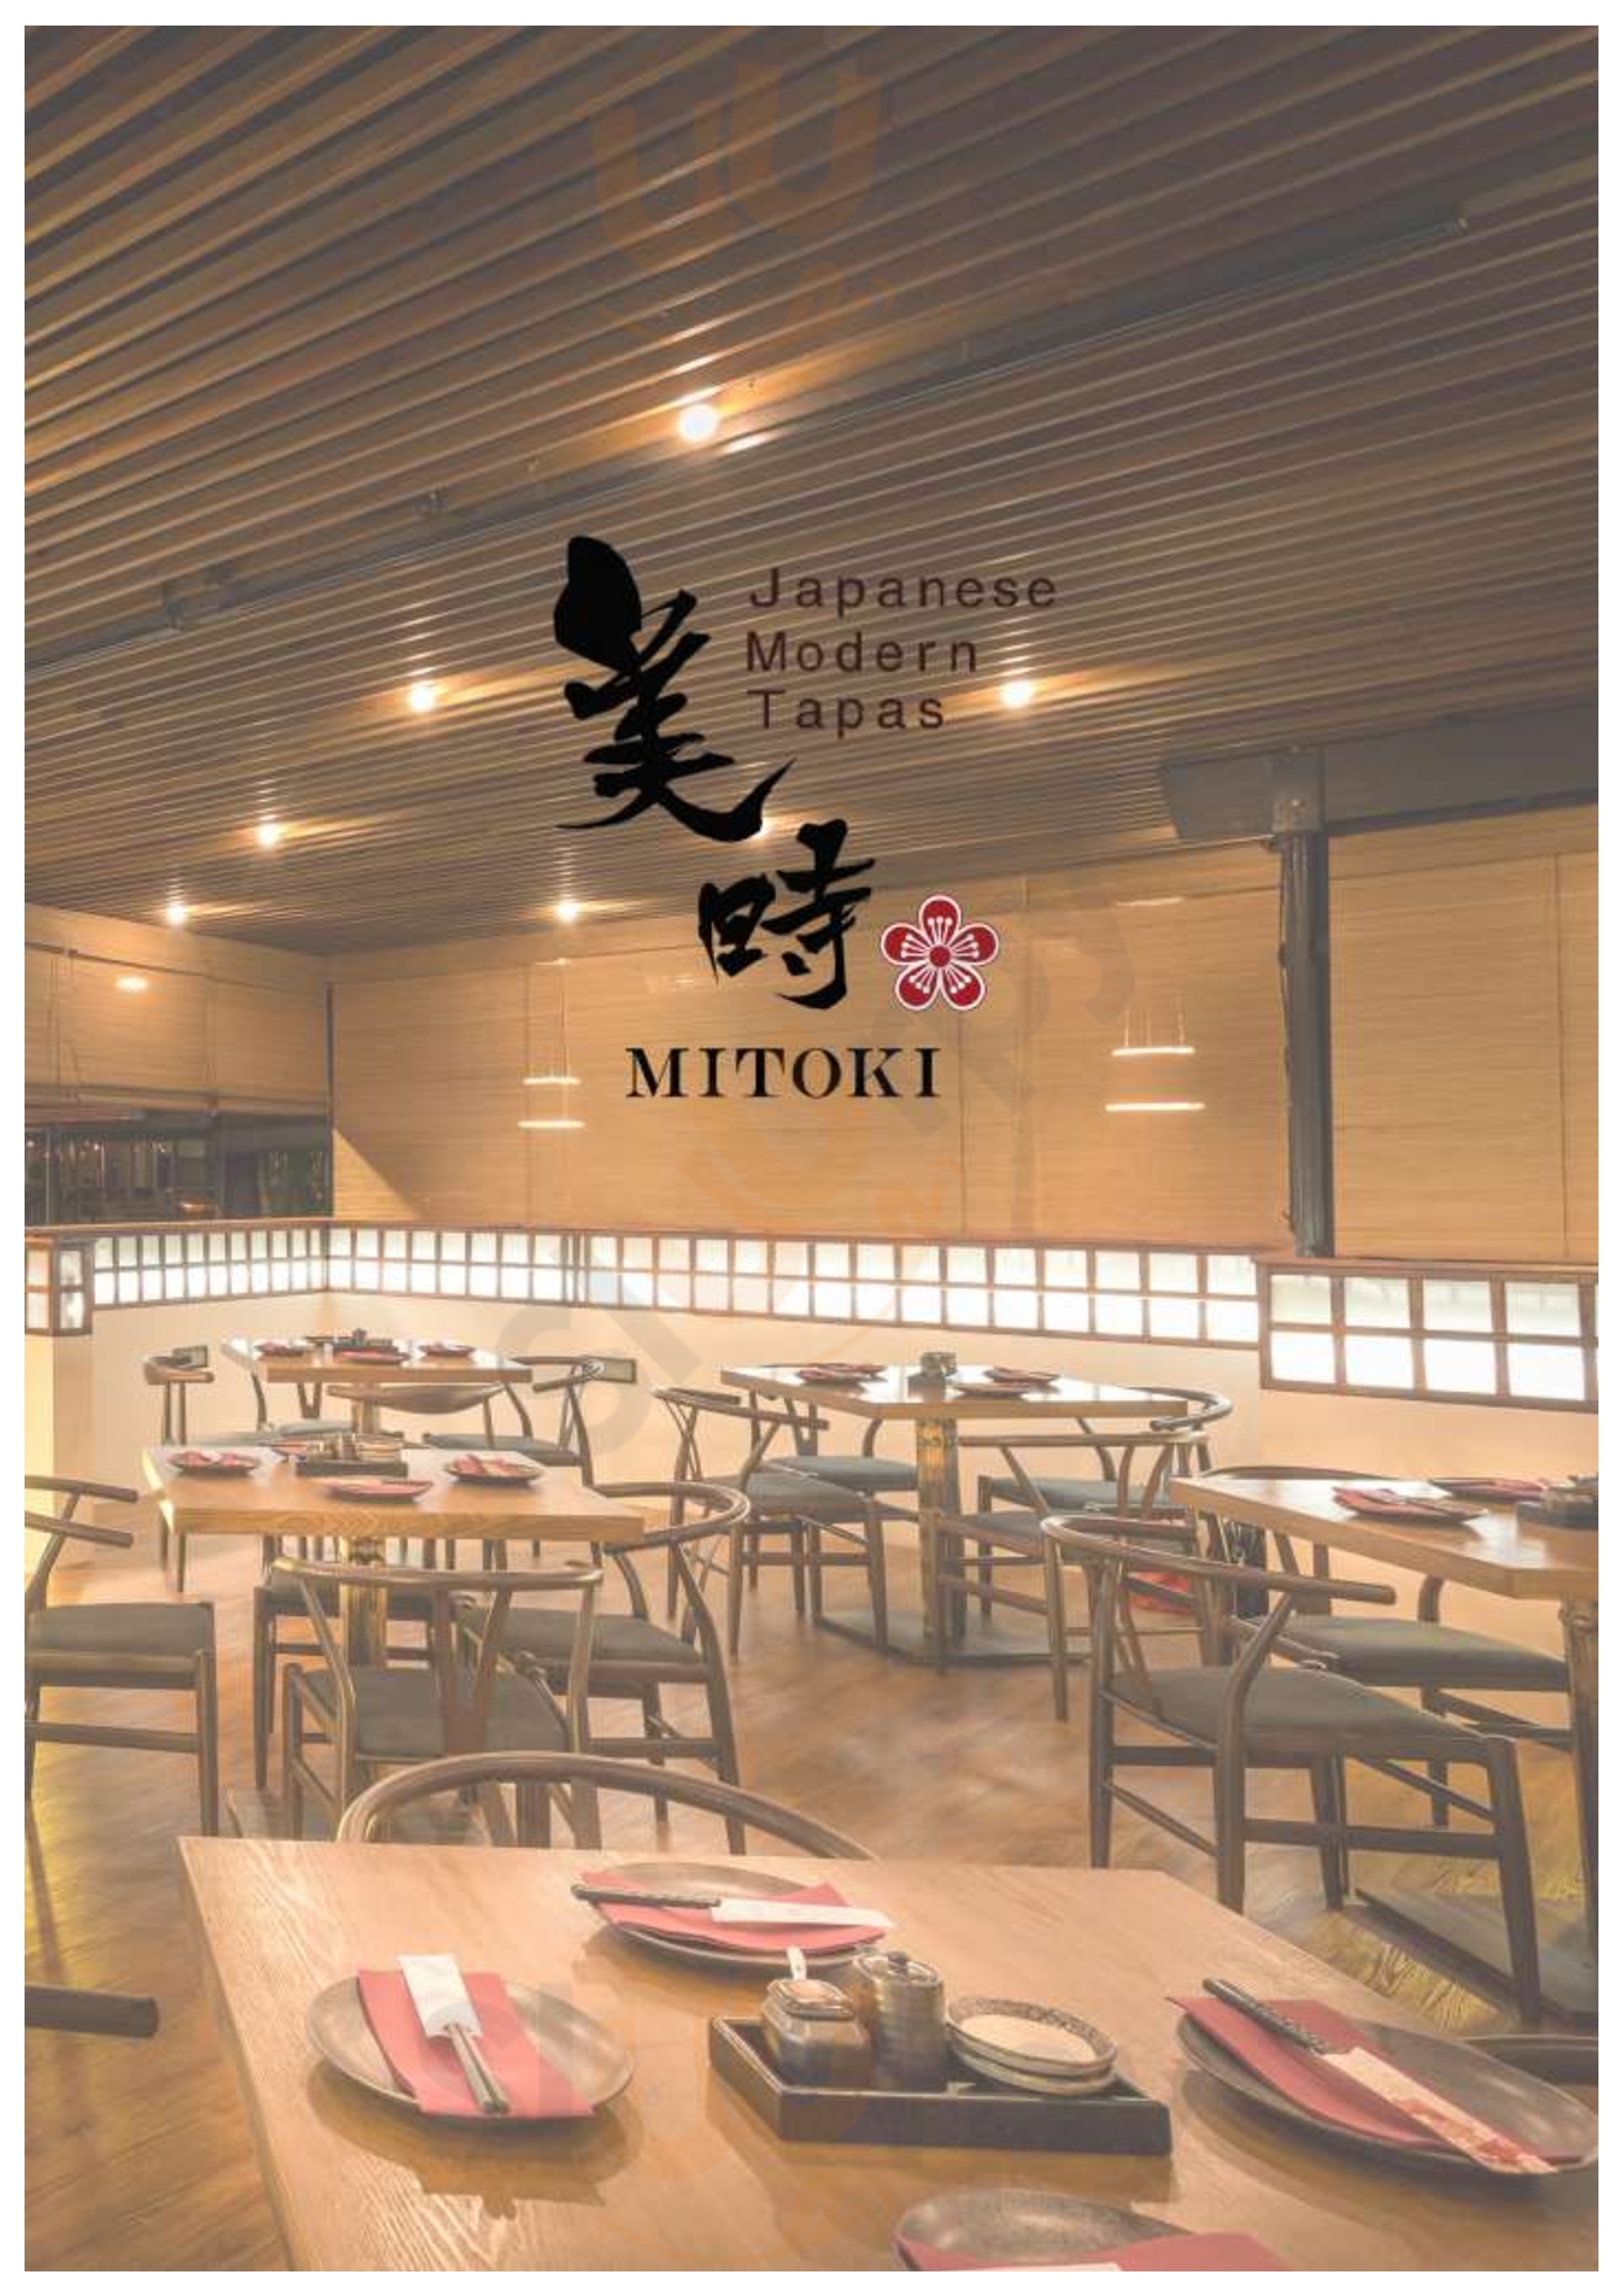 Mitoki Japanese Modern Tapas Brisbane Menu - 1